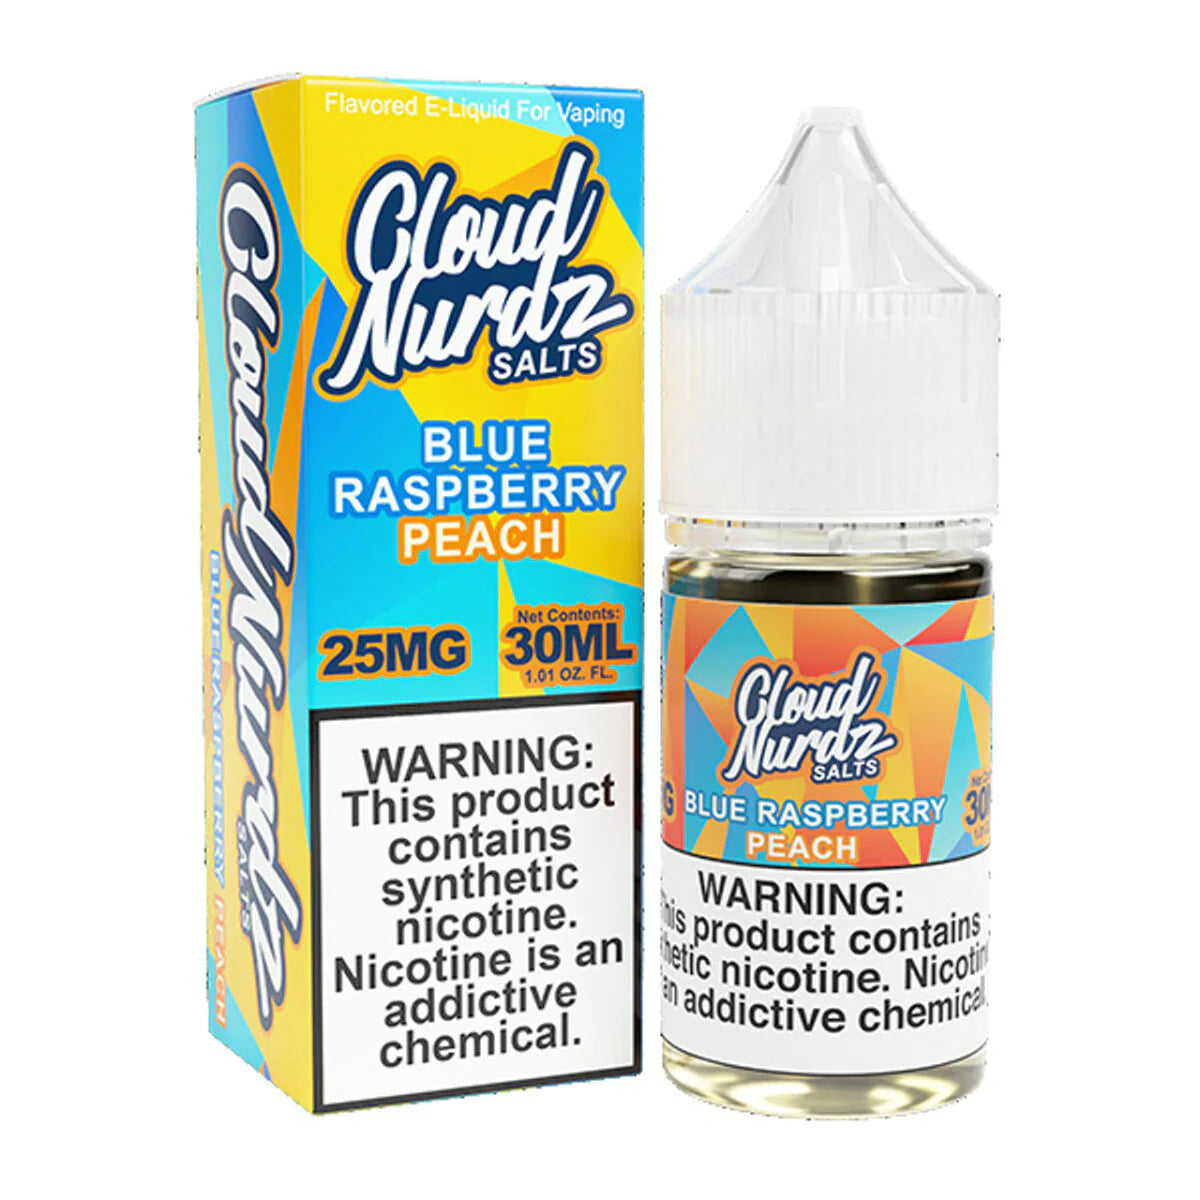 Cloud Nurdz Salts Tobacco-Free Nicotine Salt E-Liquid 30ML - Blue Raspberry Peach 